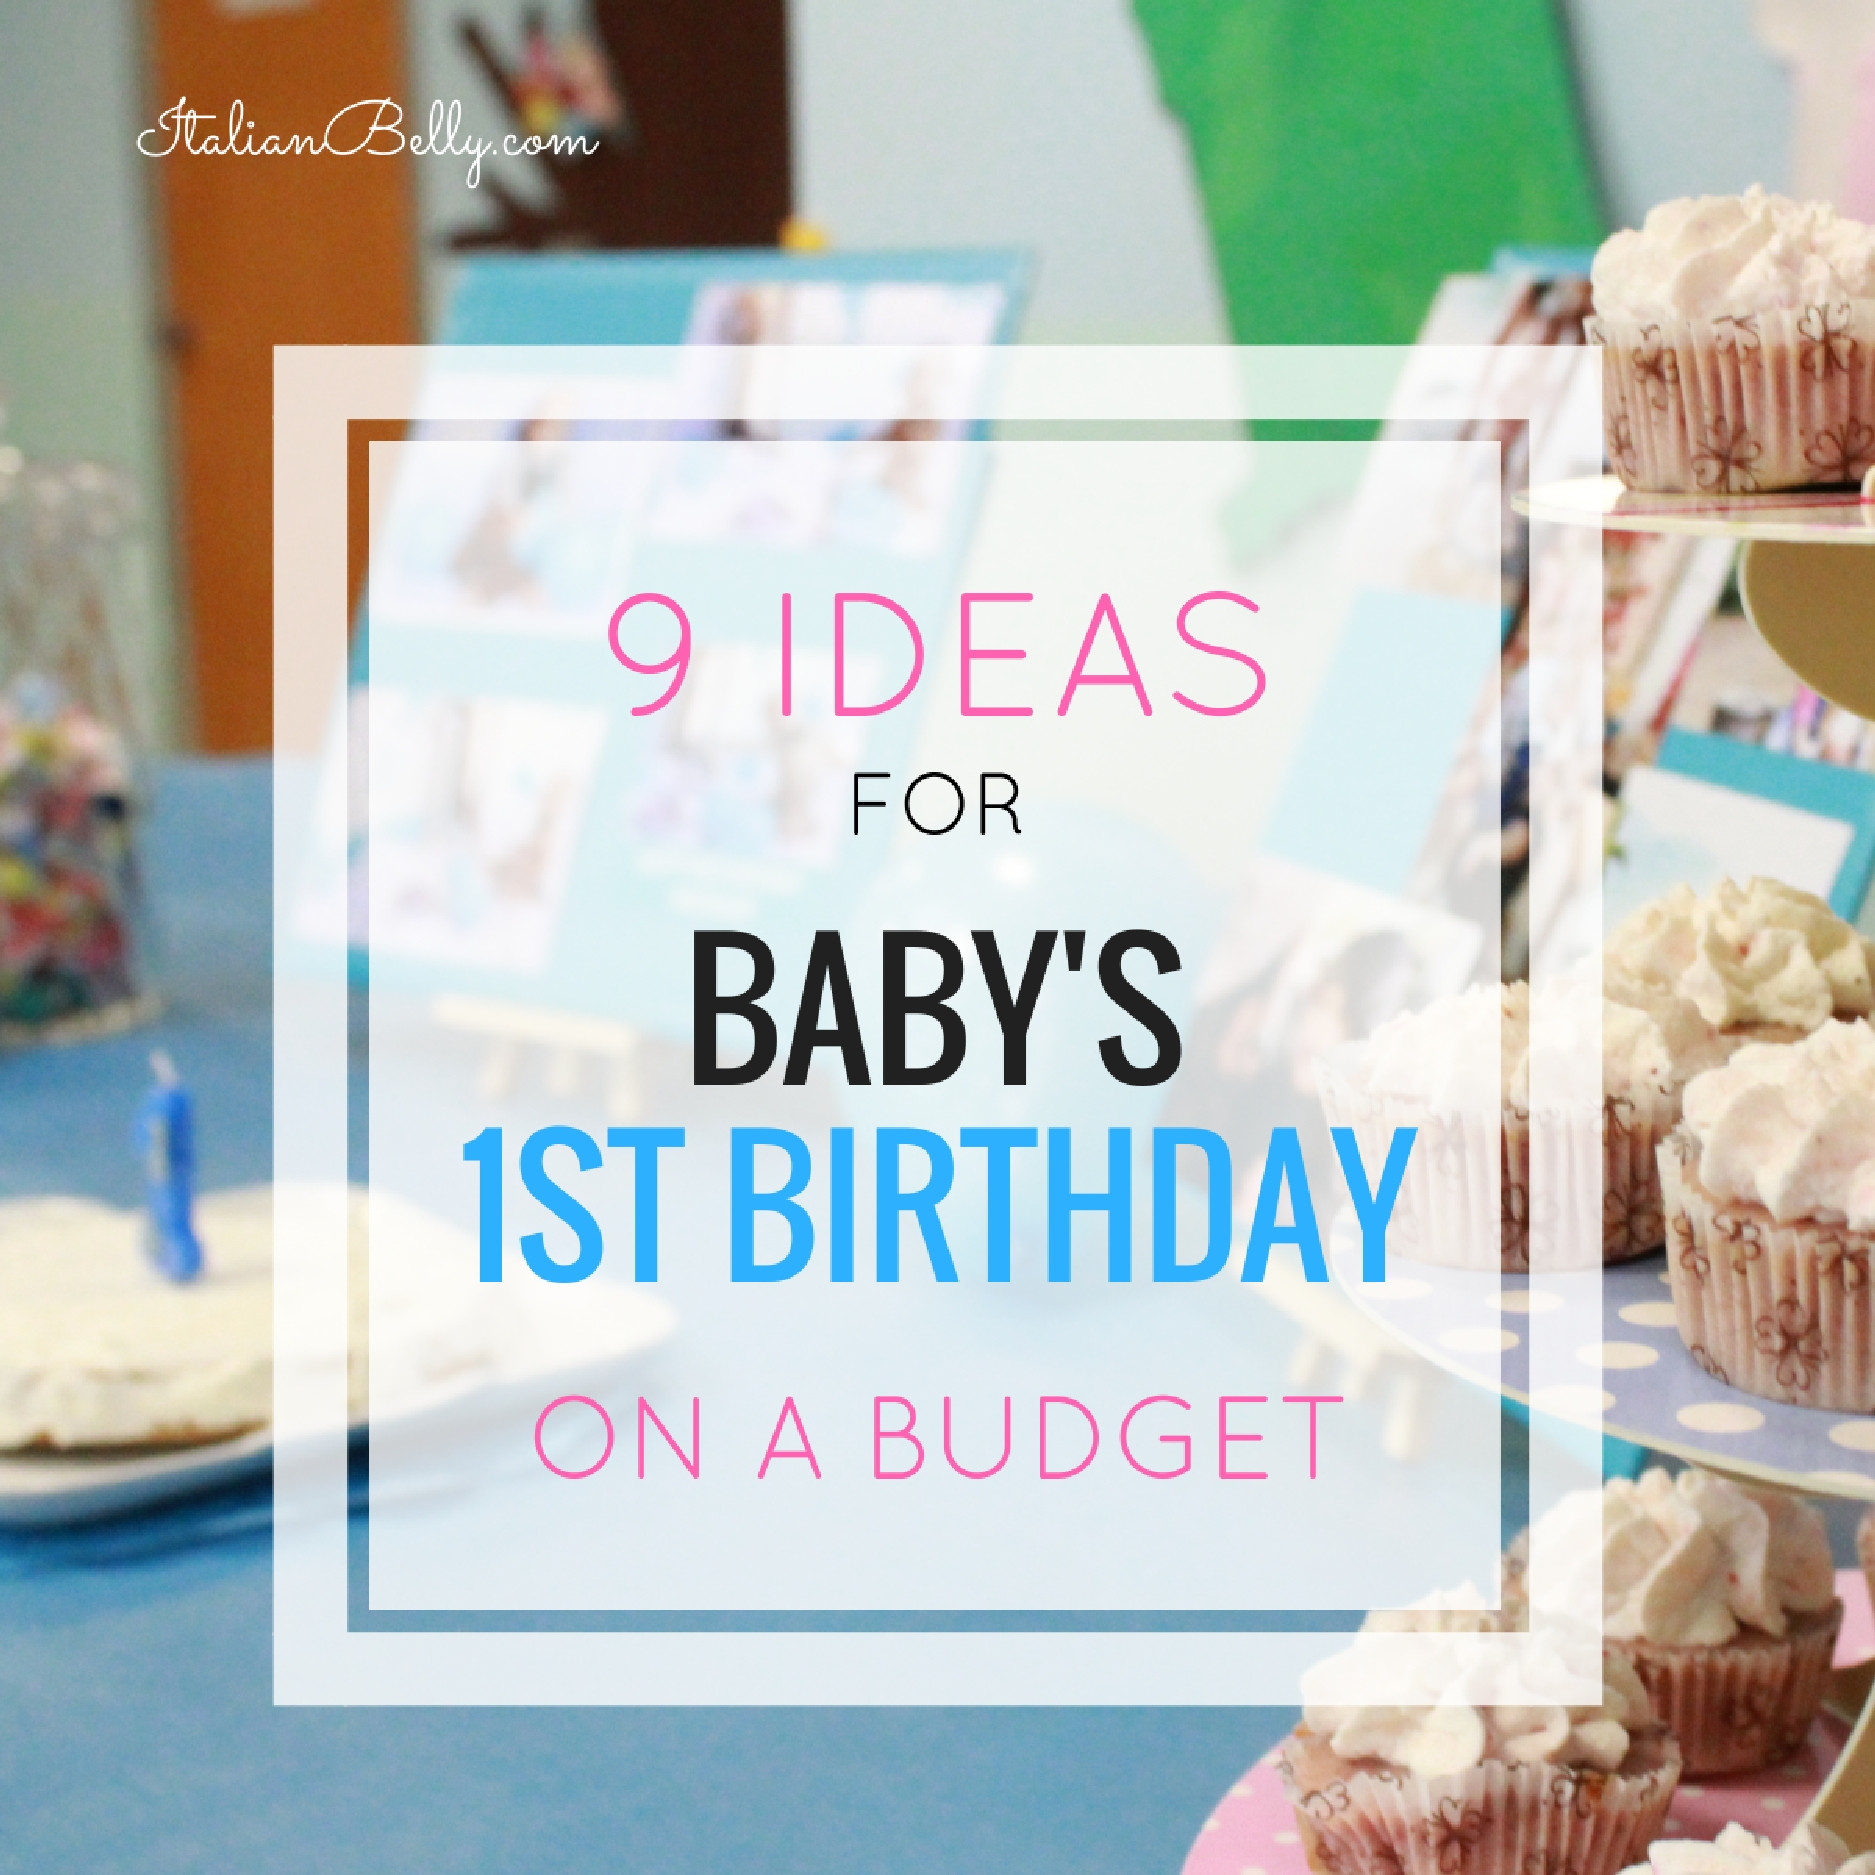 Babys First Birthday Gift Ideas
 Baby s 1st Birthday Ideas on a Bud Italian Belly